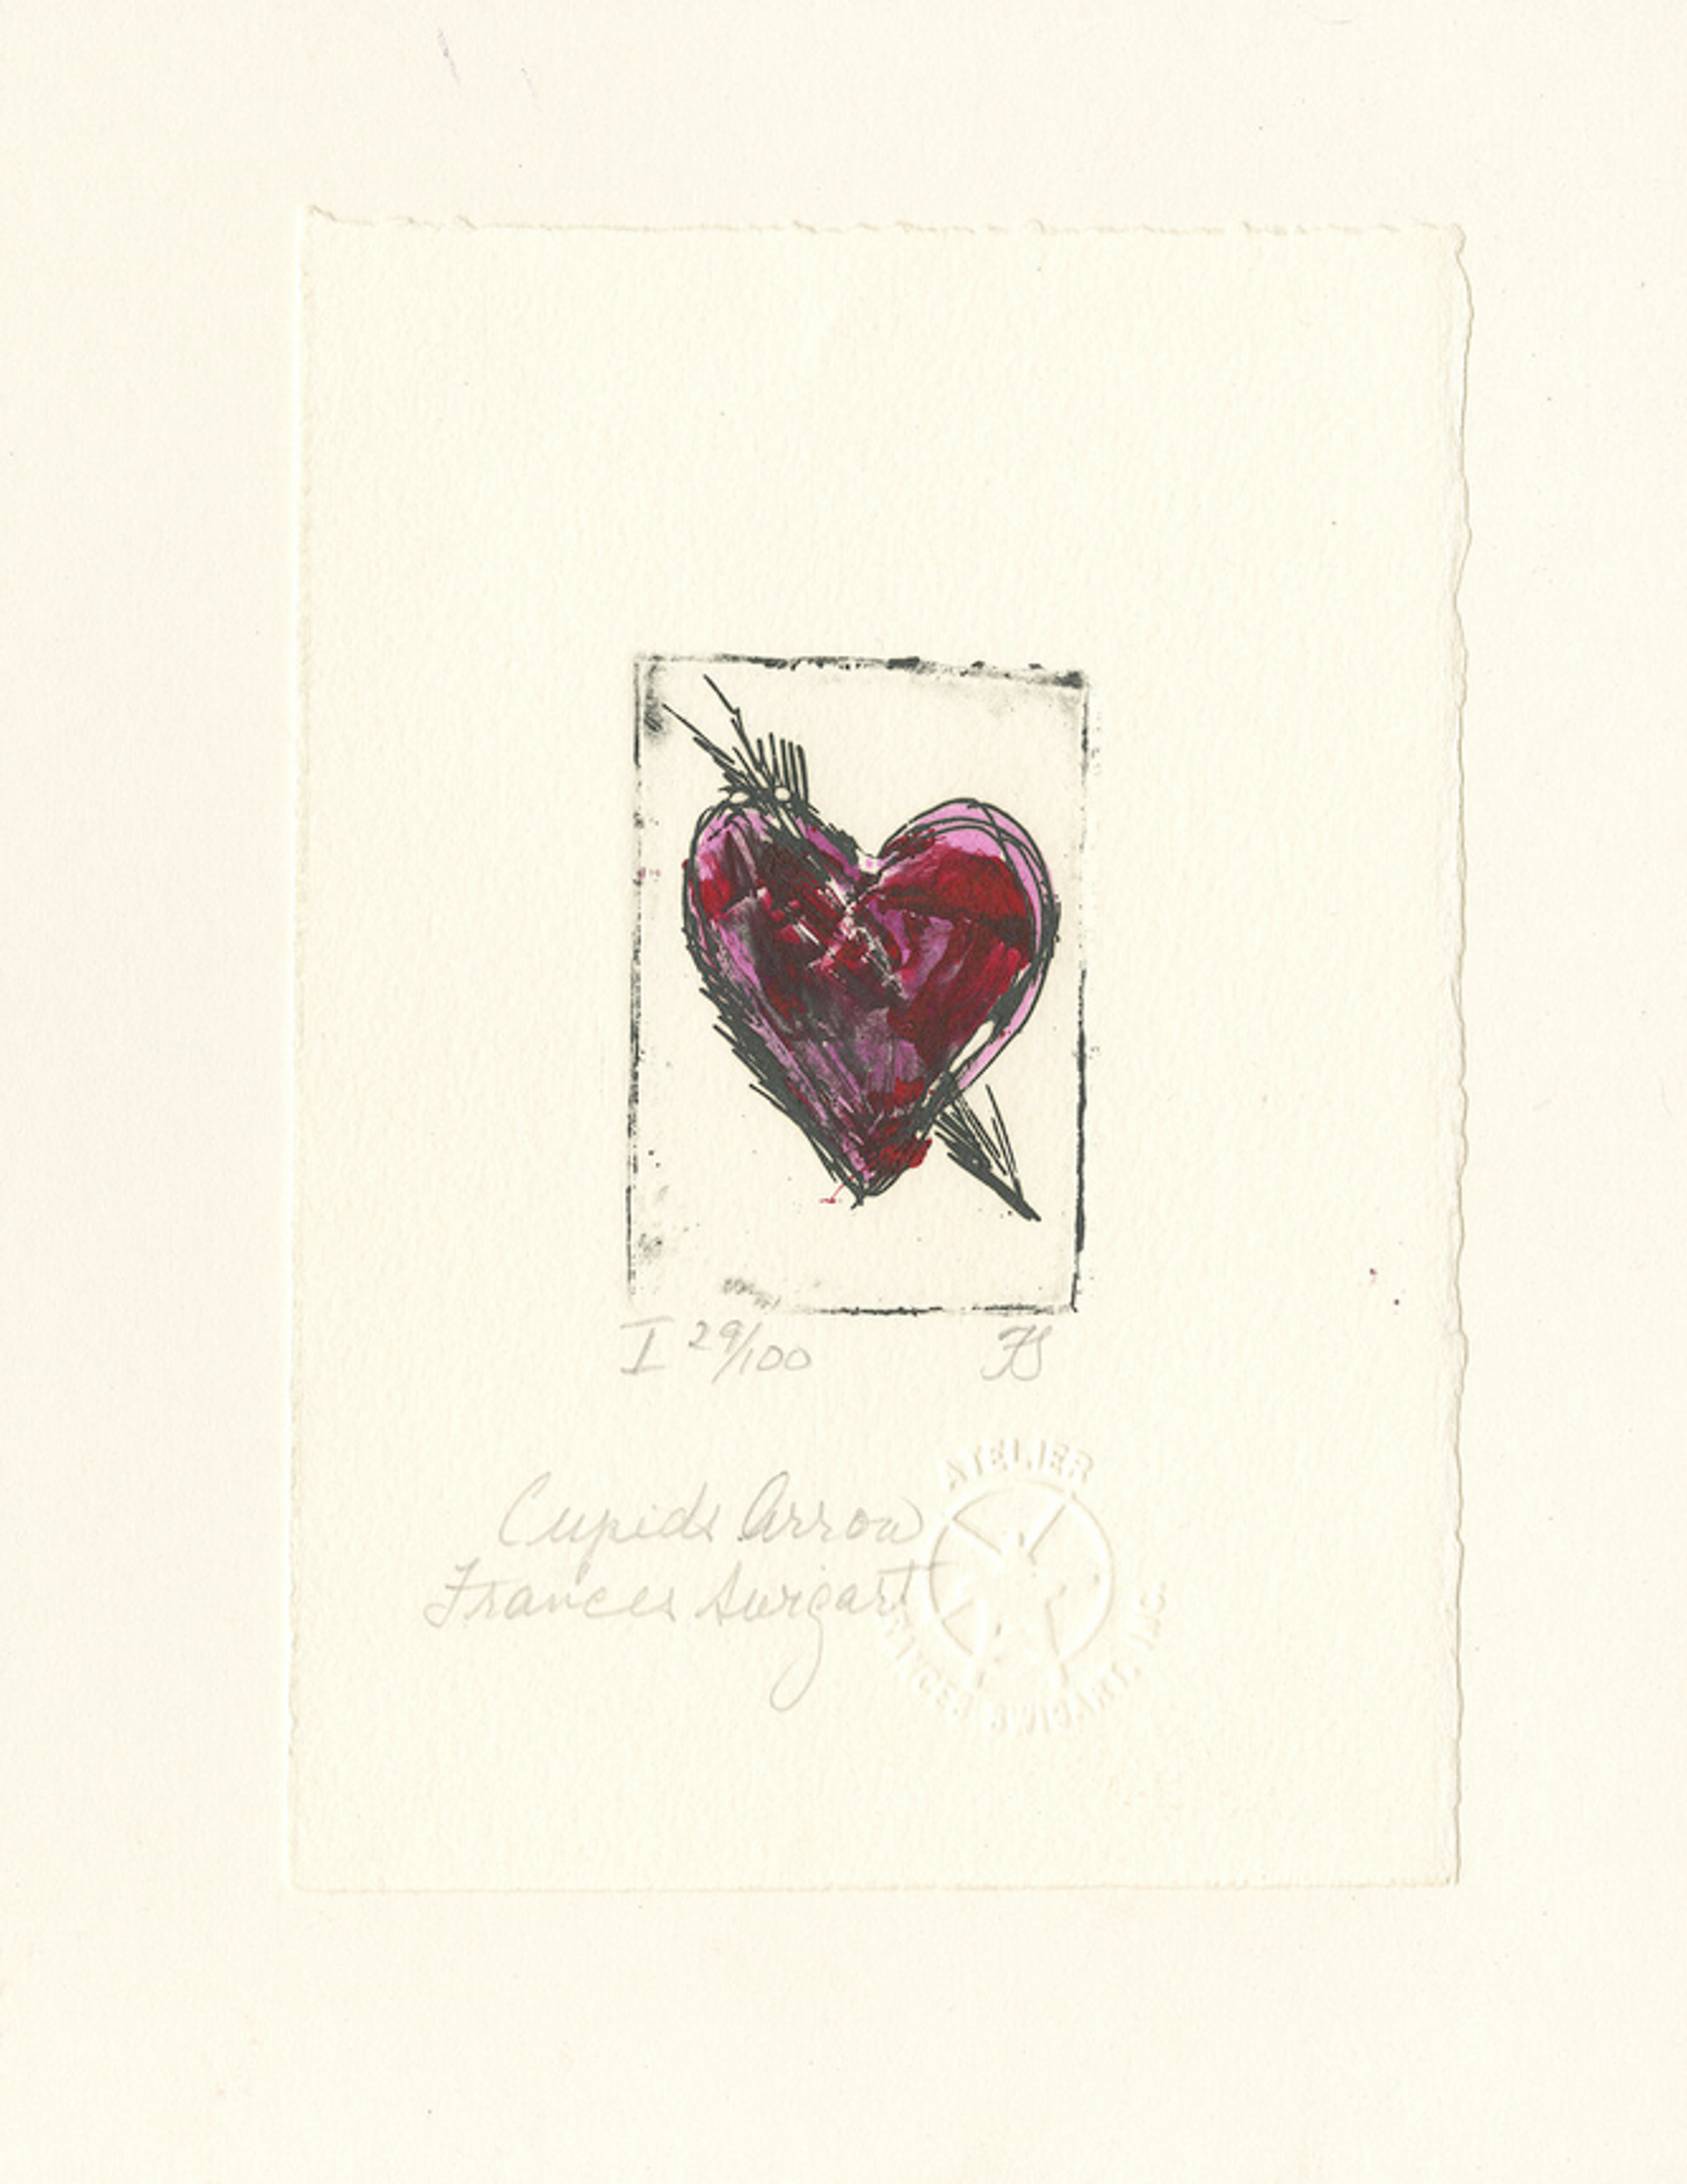 Heart Series, Cupid's Arrow by Frances Swigart